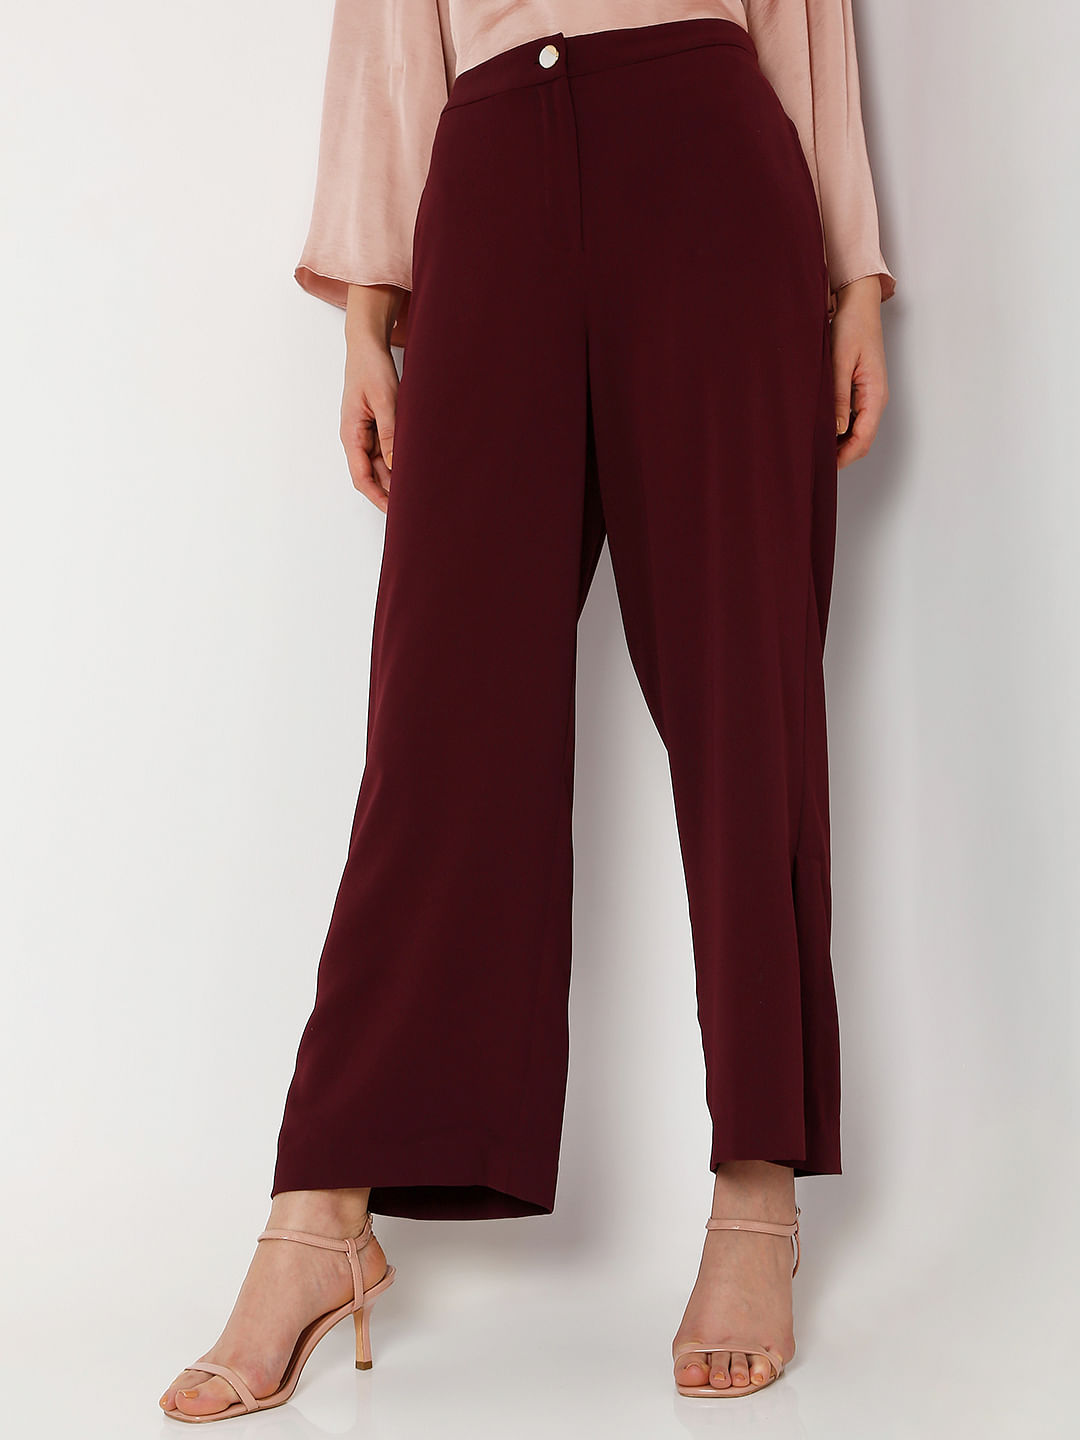 Buy LNX Women's Linen Crop Pants Elastic Waist Drawstring Loose Wide Leg High  Waist Trouser (Beige, Small) at Amazon.in